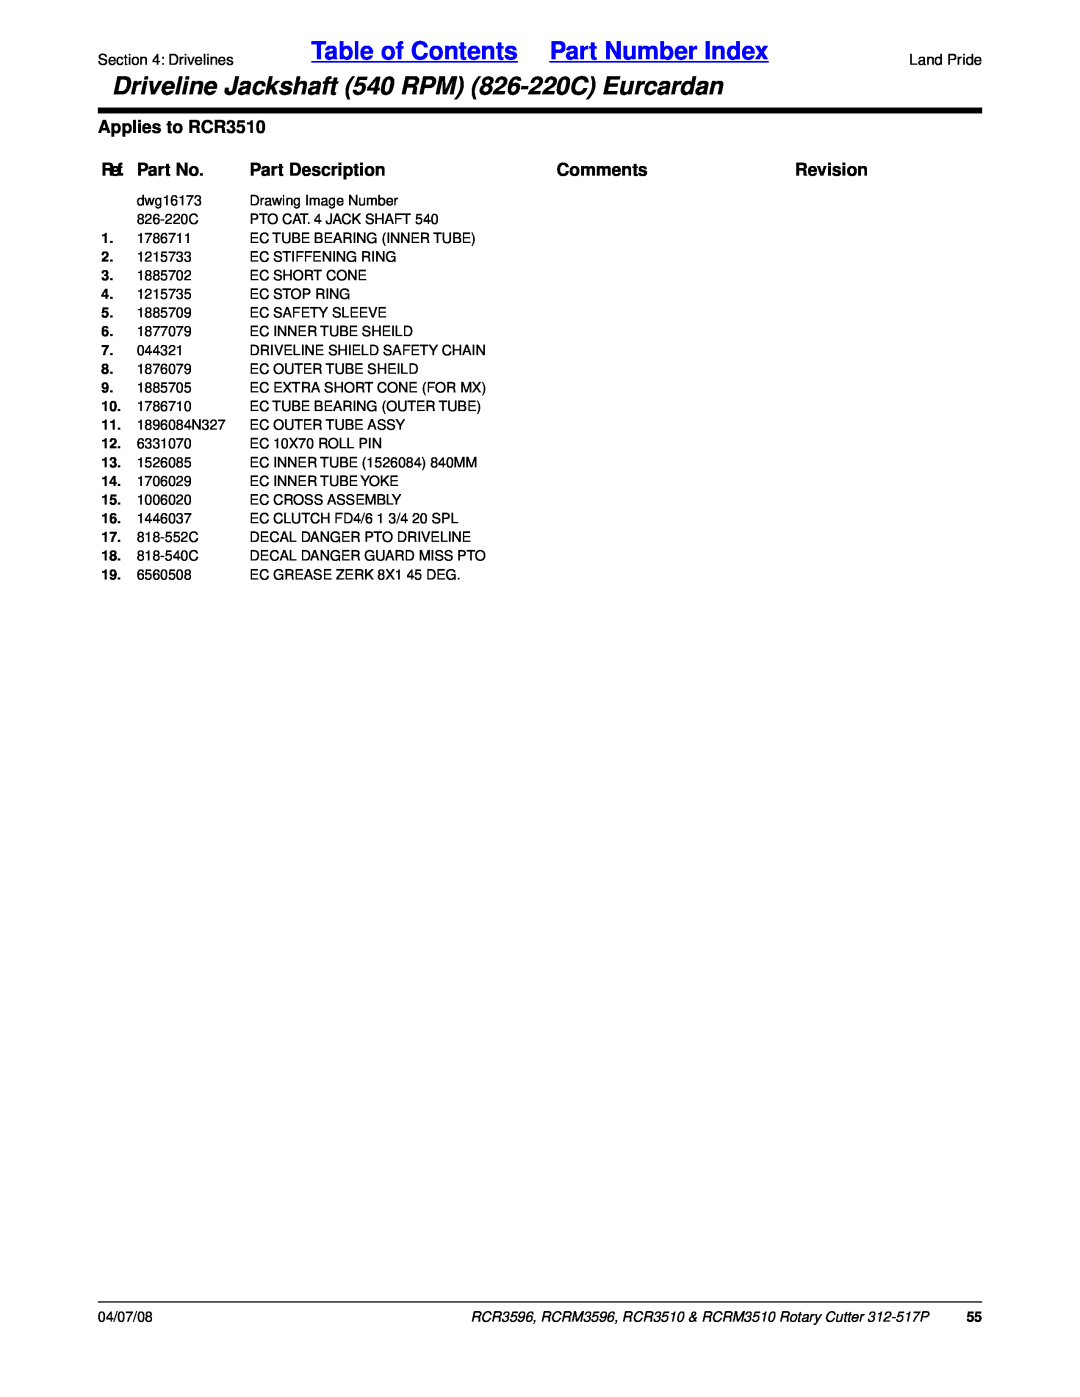 Land Pride RCR3596 Table of Contents Part Number Index, Driveline Jackshaft 540 RPM 826-220CEurcardan, Applies to RCR3510 